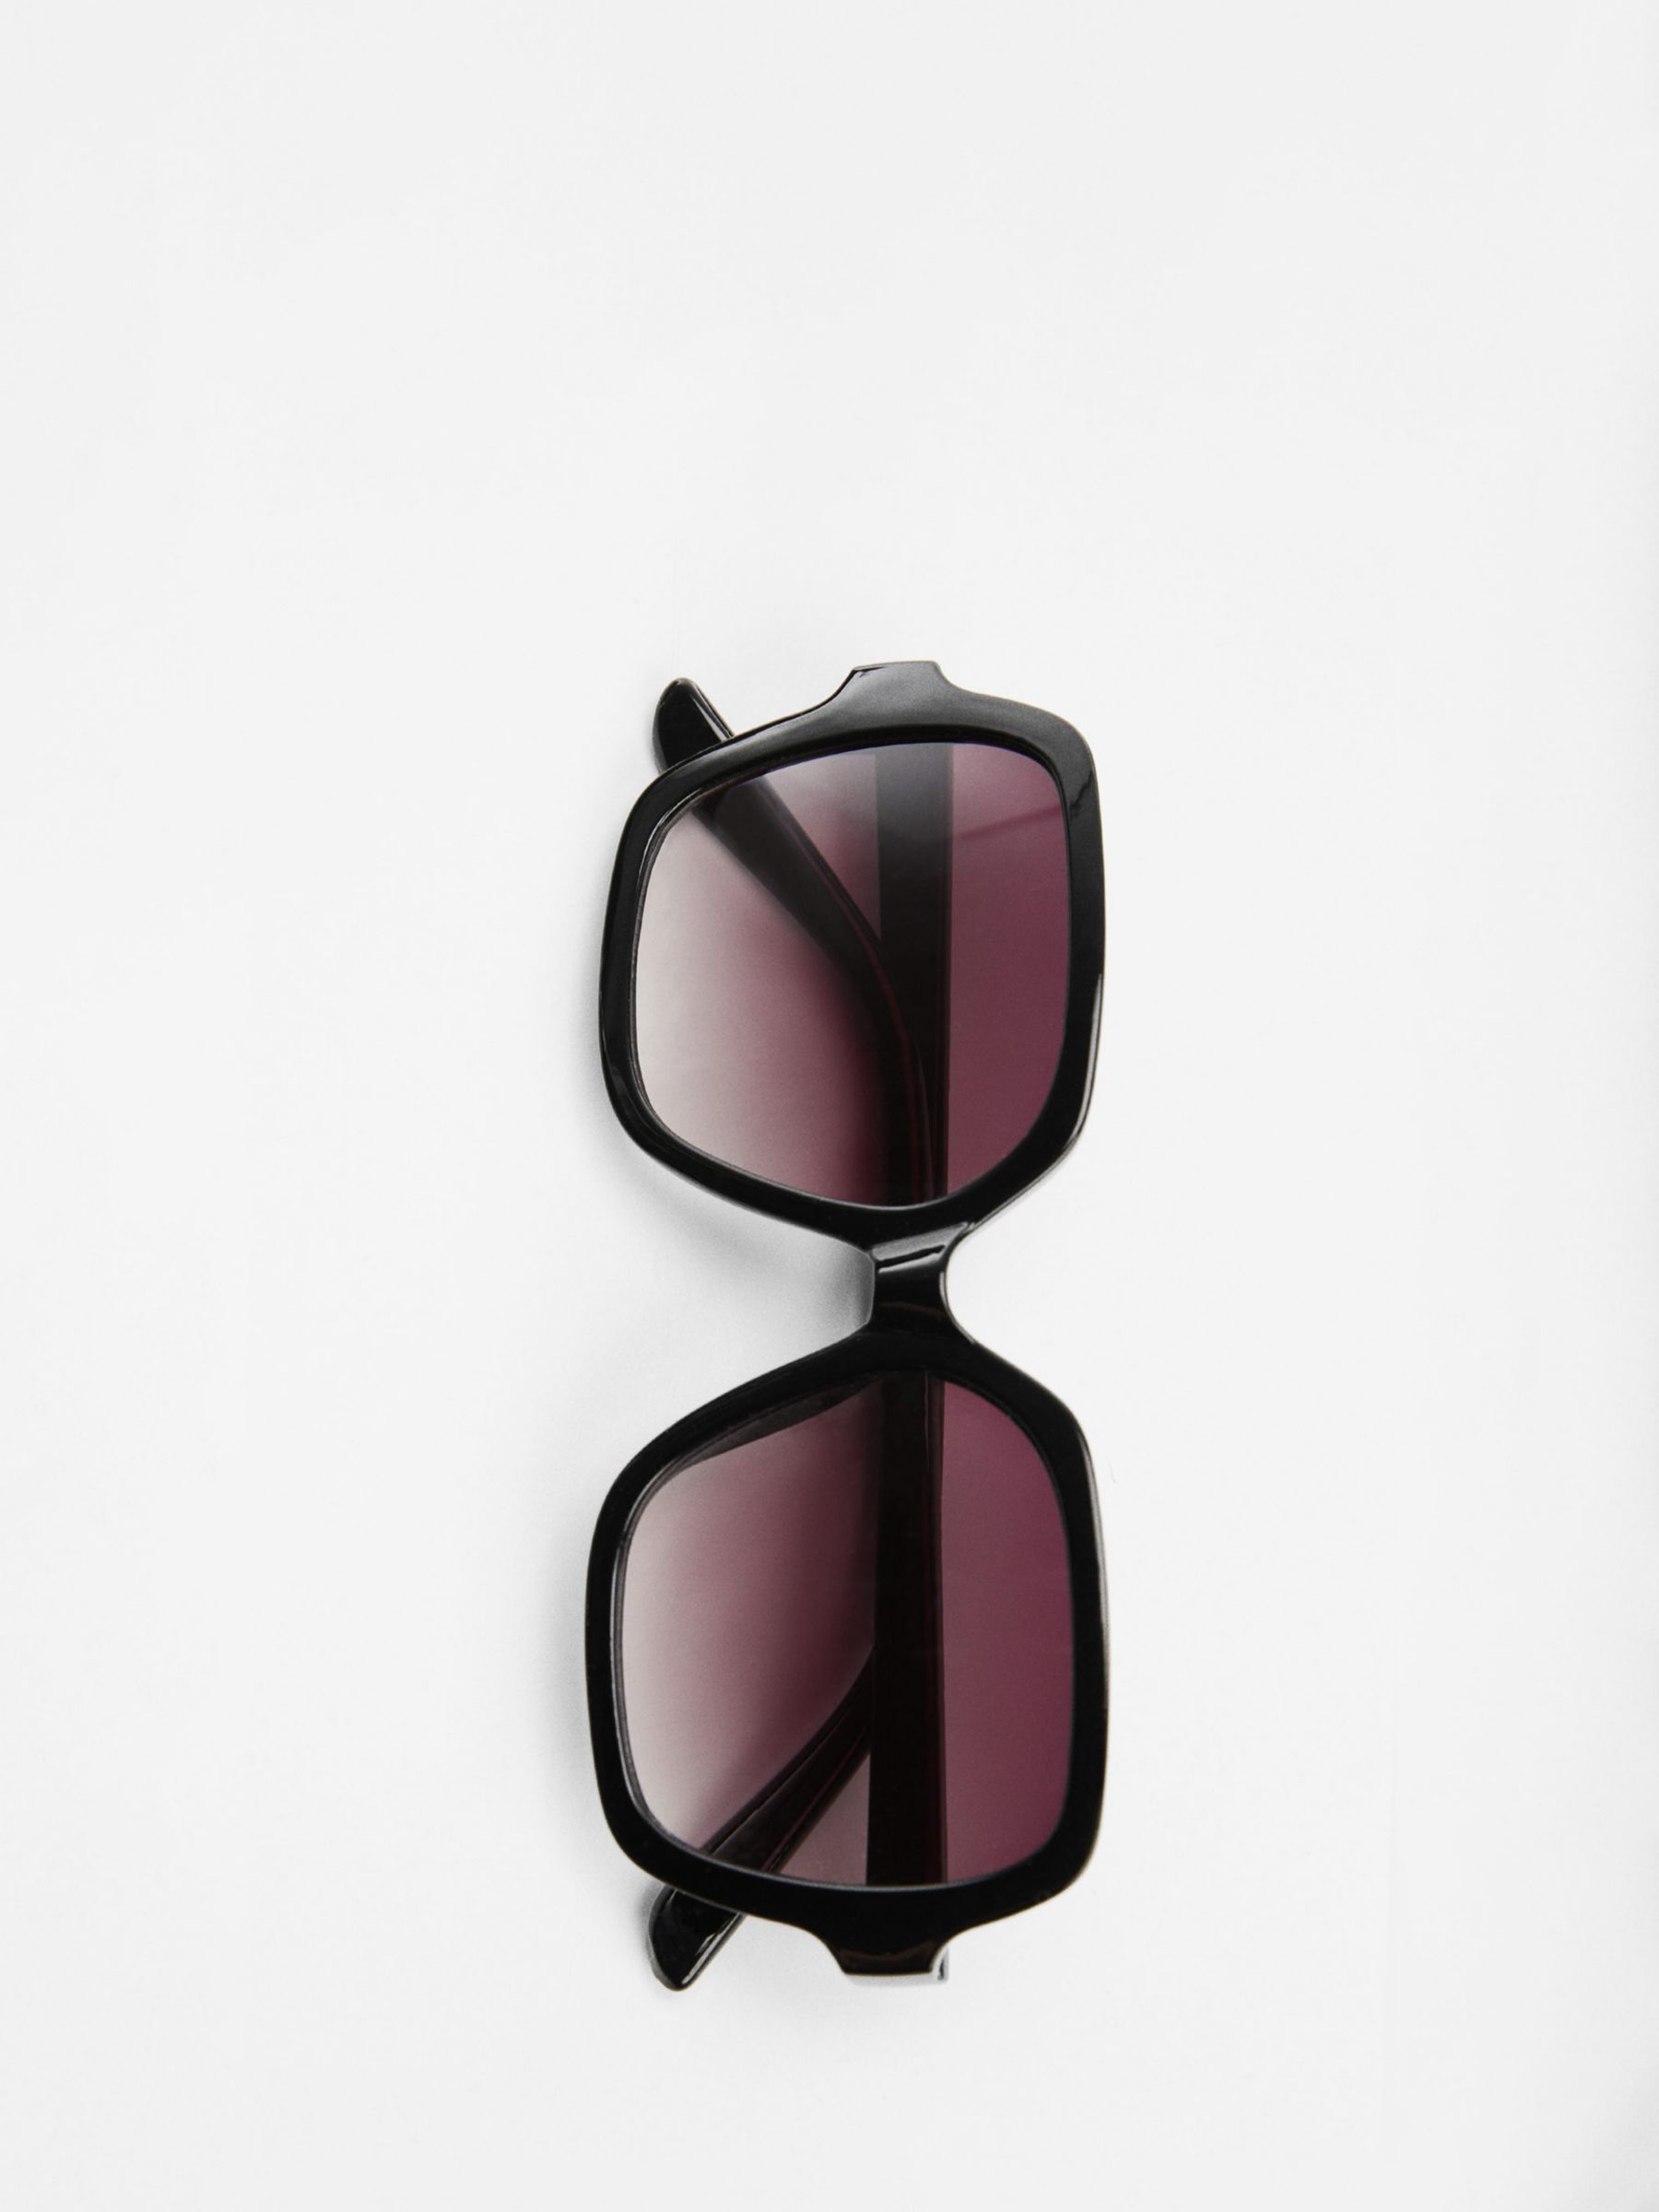 Mango Fernanda Square Tortoiseshell Sunglasses, Black, One Size